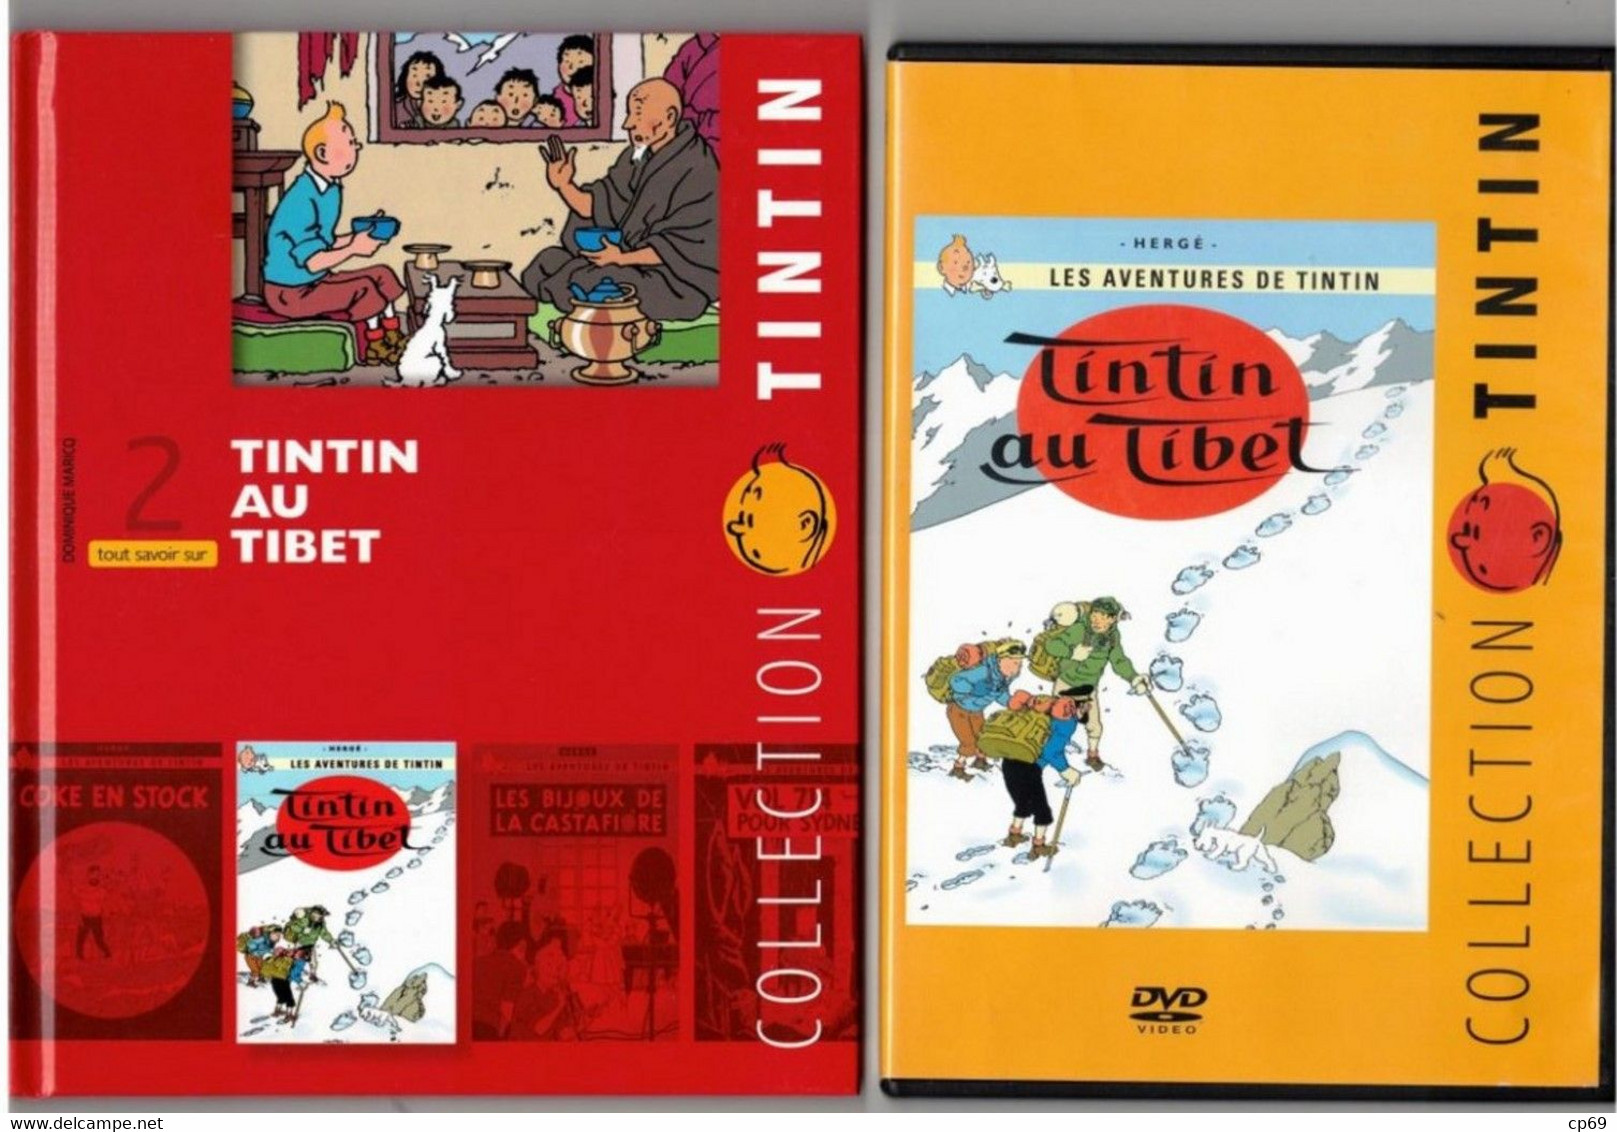 Tintin Hergé / Moulinsart 2010 Milou Chien Dog Cane Tintin Au Tibet Capitaine Haddock N°2 DVD + Livret Explicatif B.Etat - Dibujos Animados